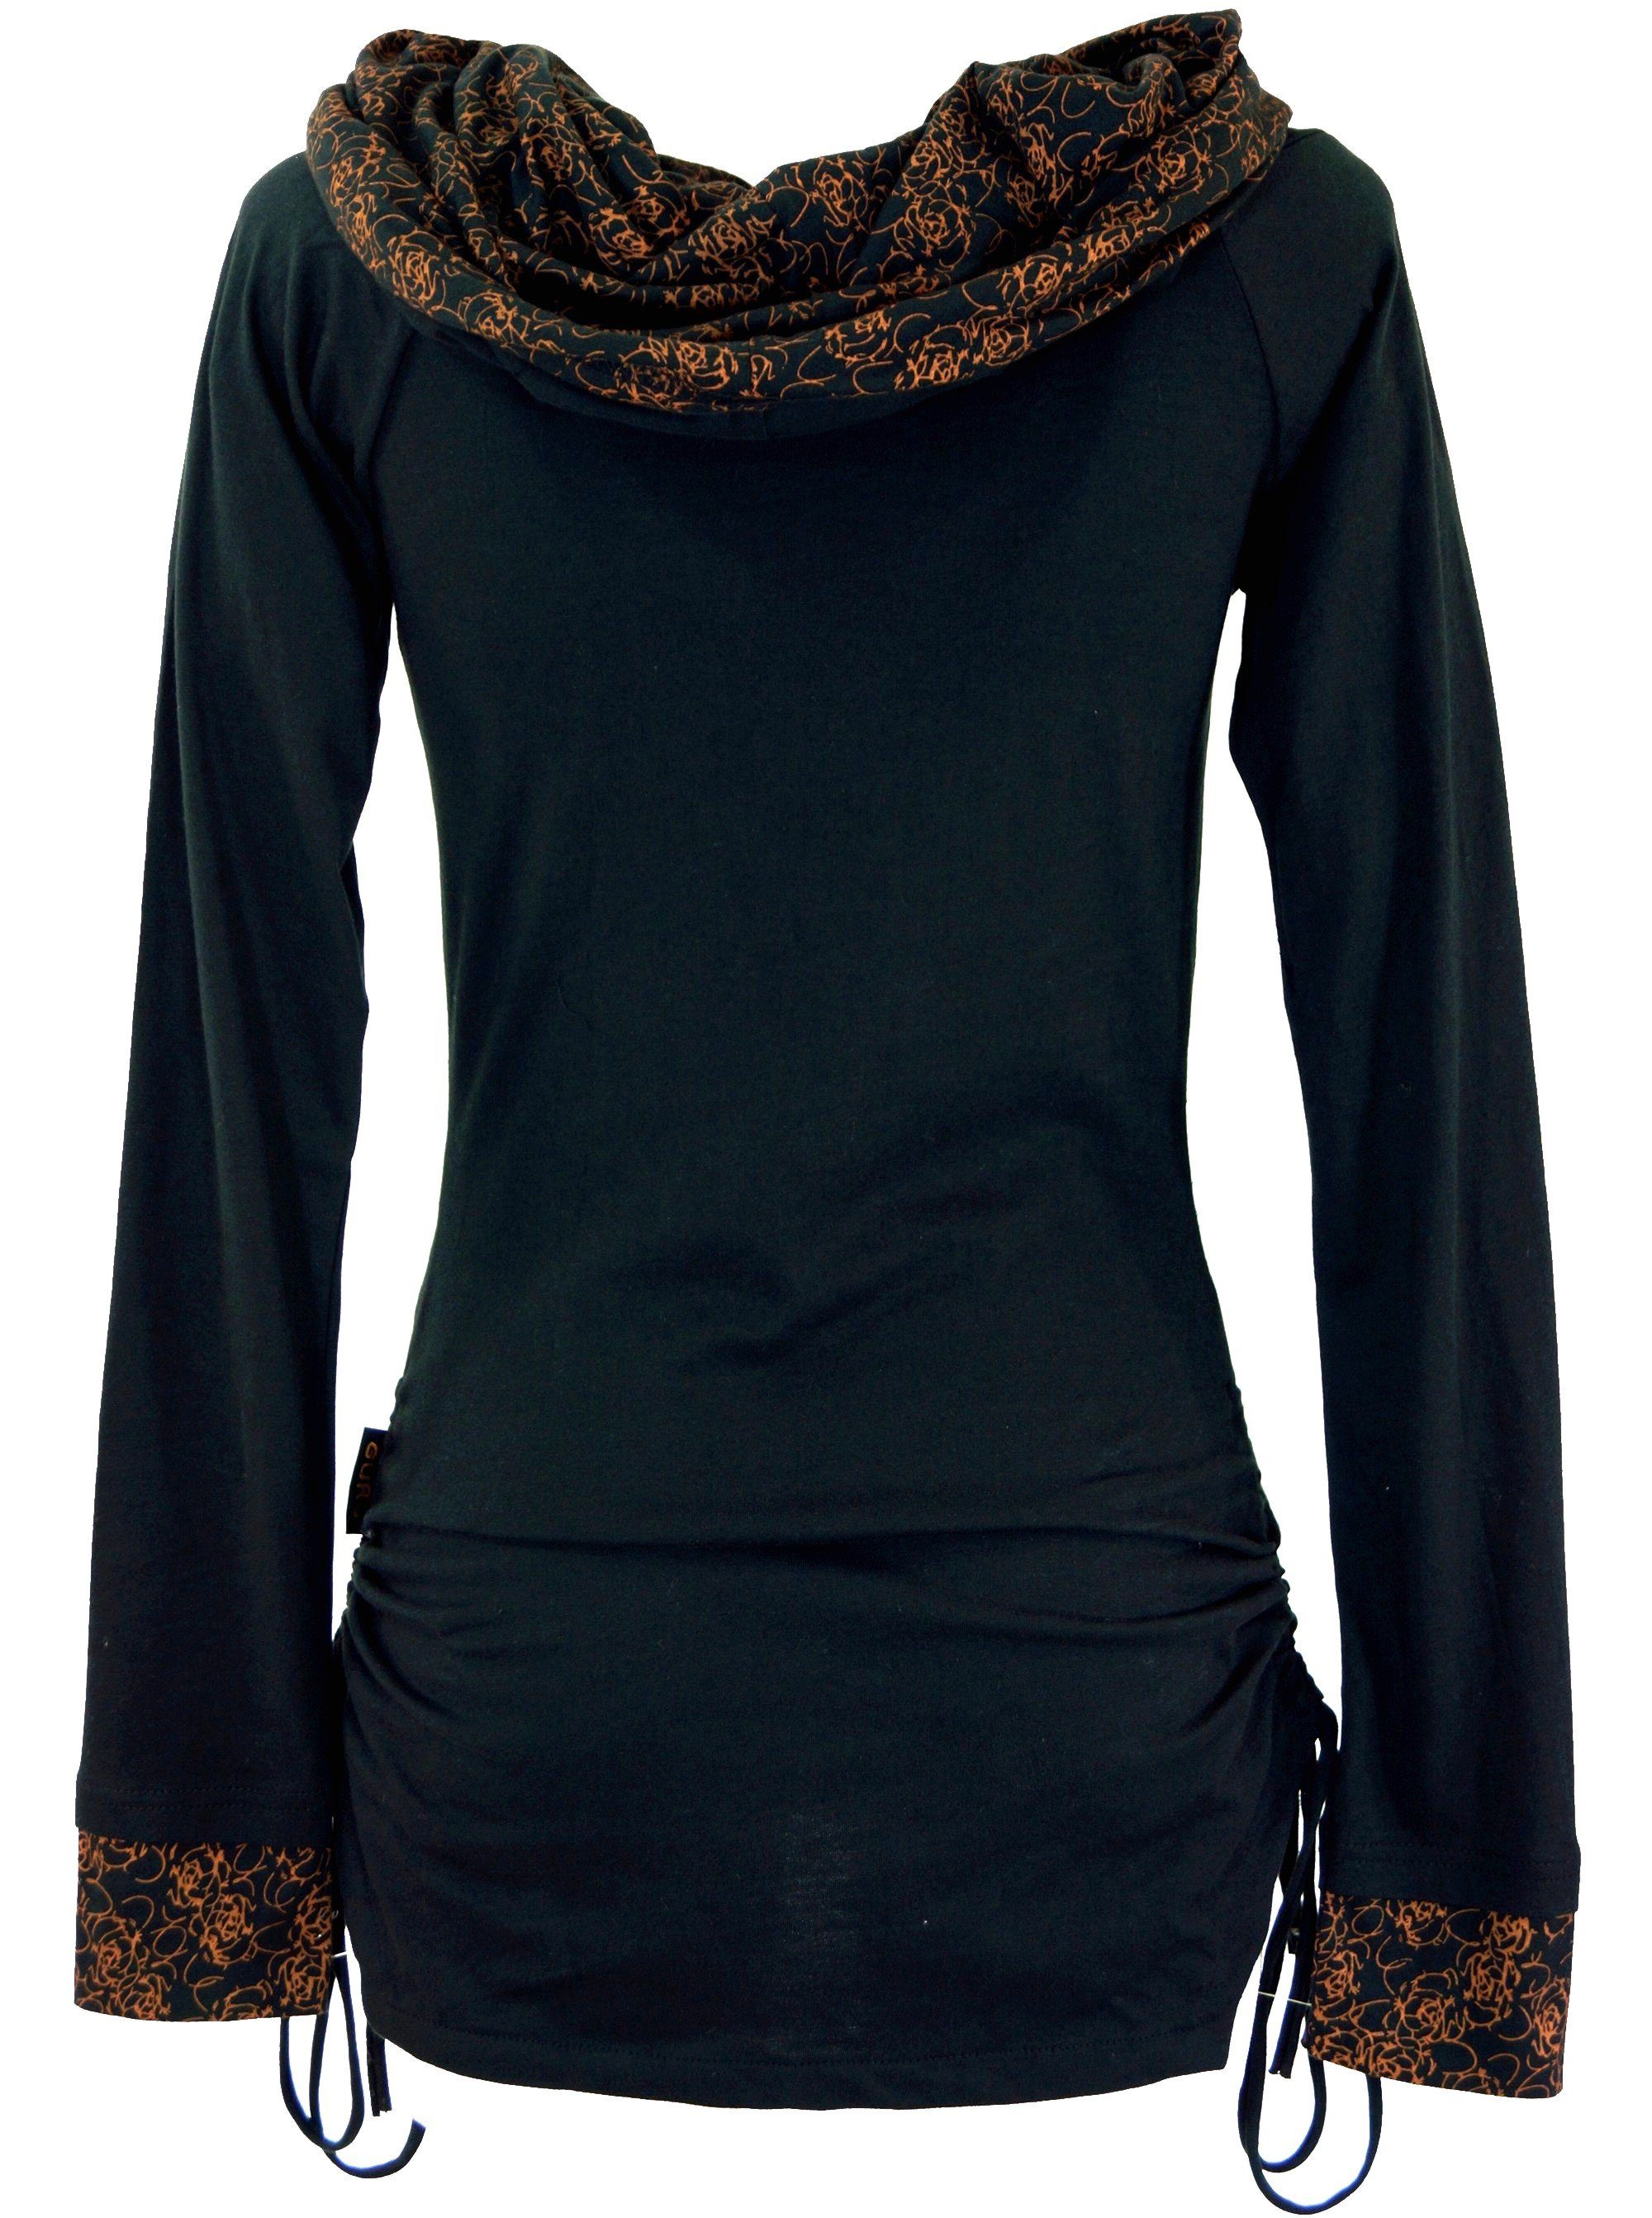 Bekleidung Longsleeve Boho aus Bio-Baumwolle, Guru-Shop Longshirt Shirt.. alternative schwarz/orange